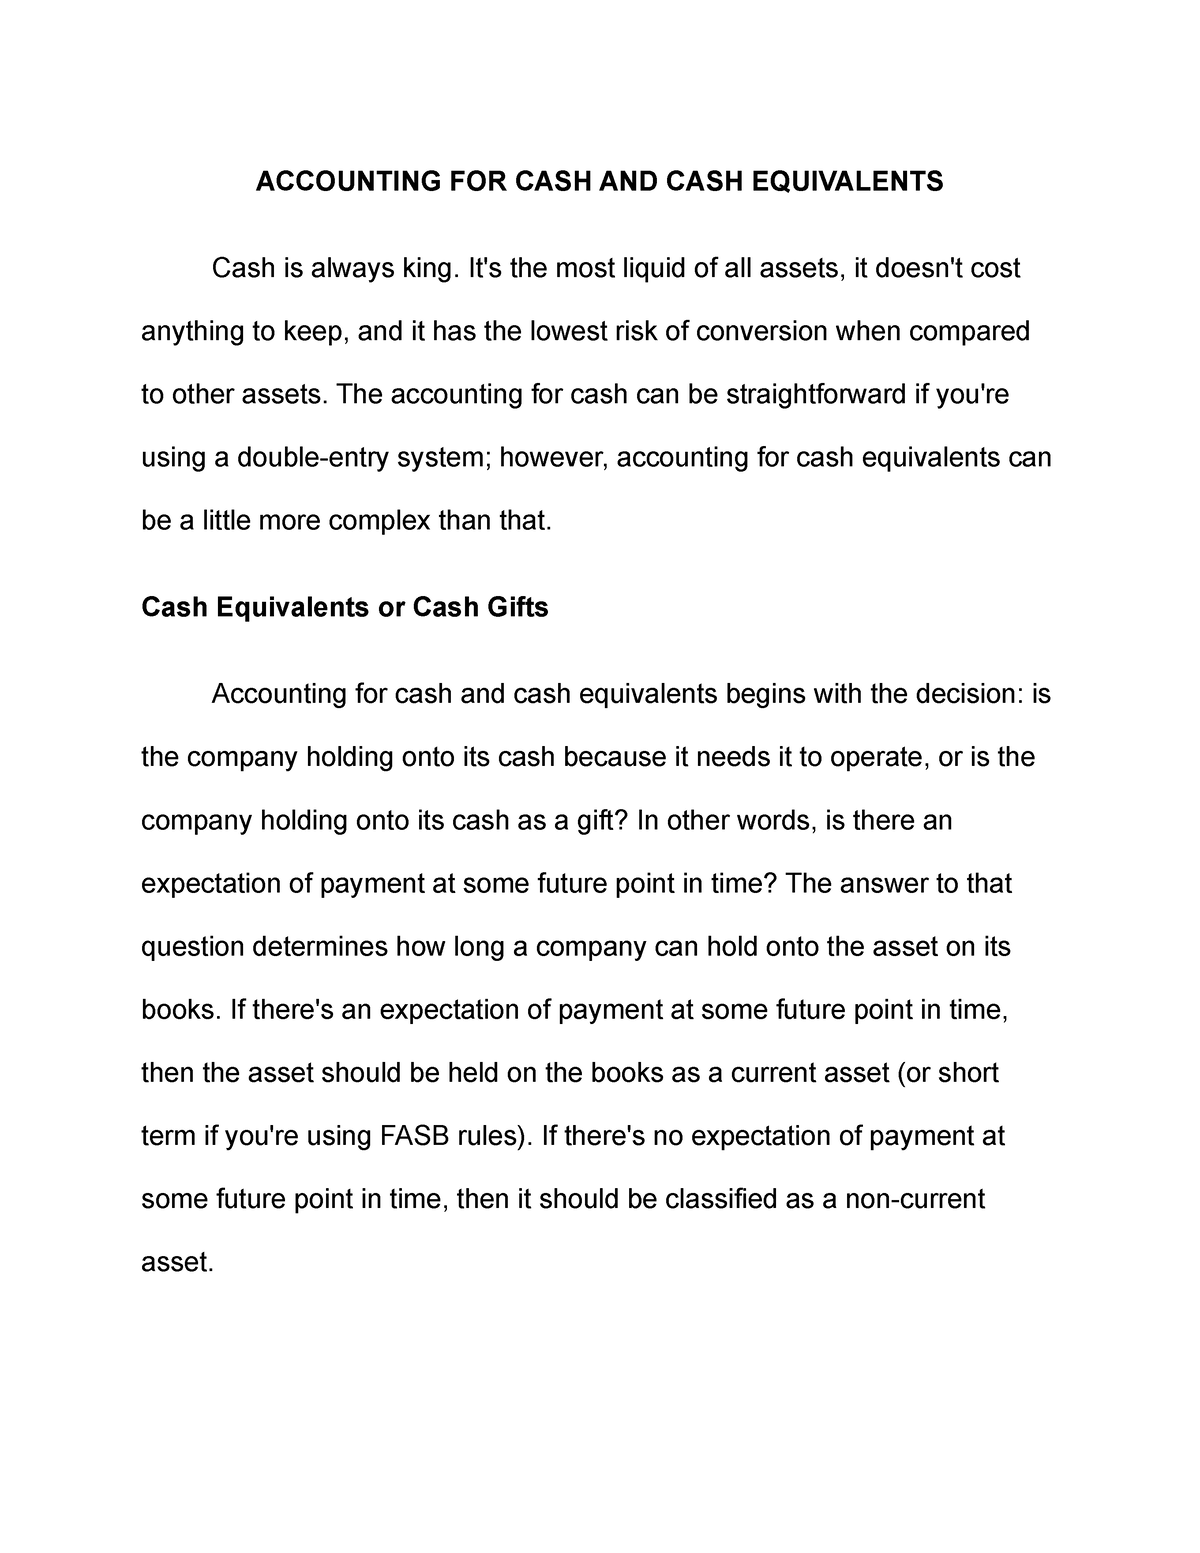 essay on cash management